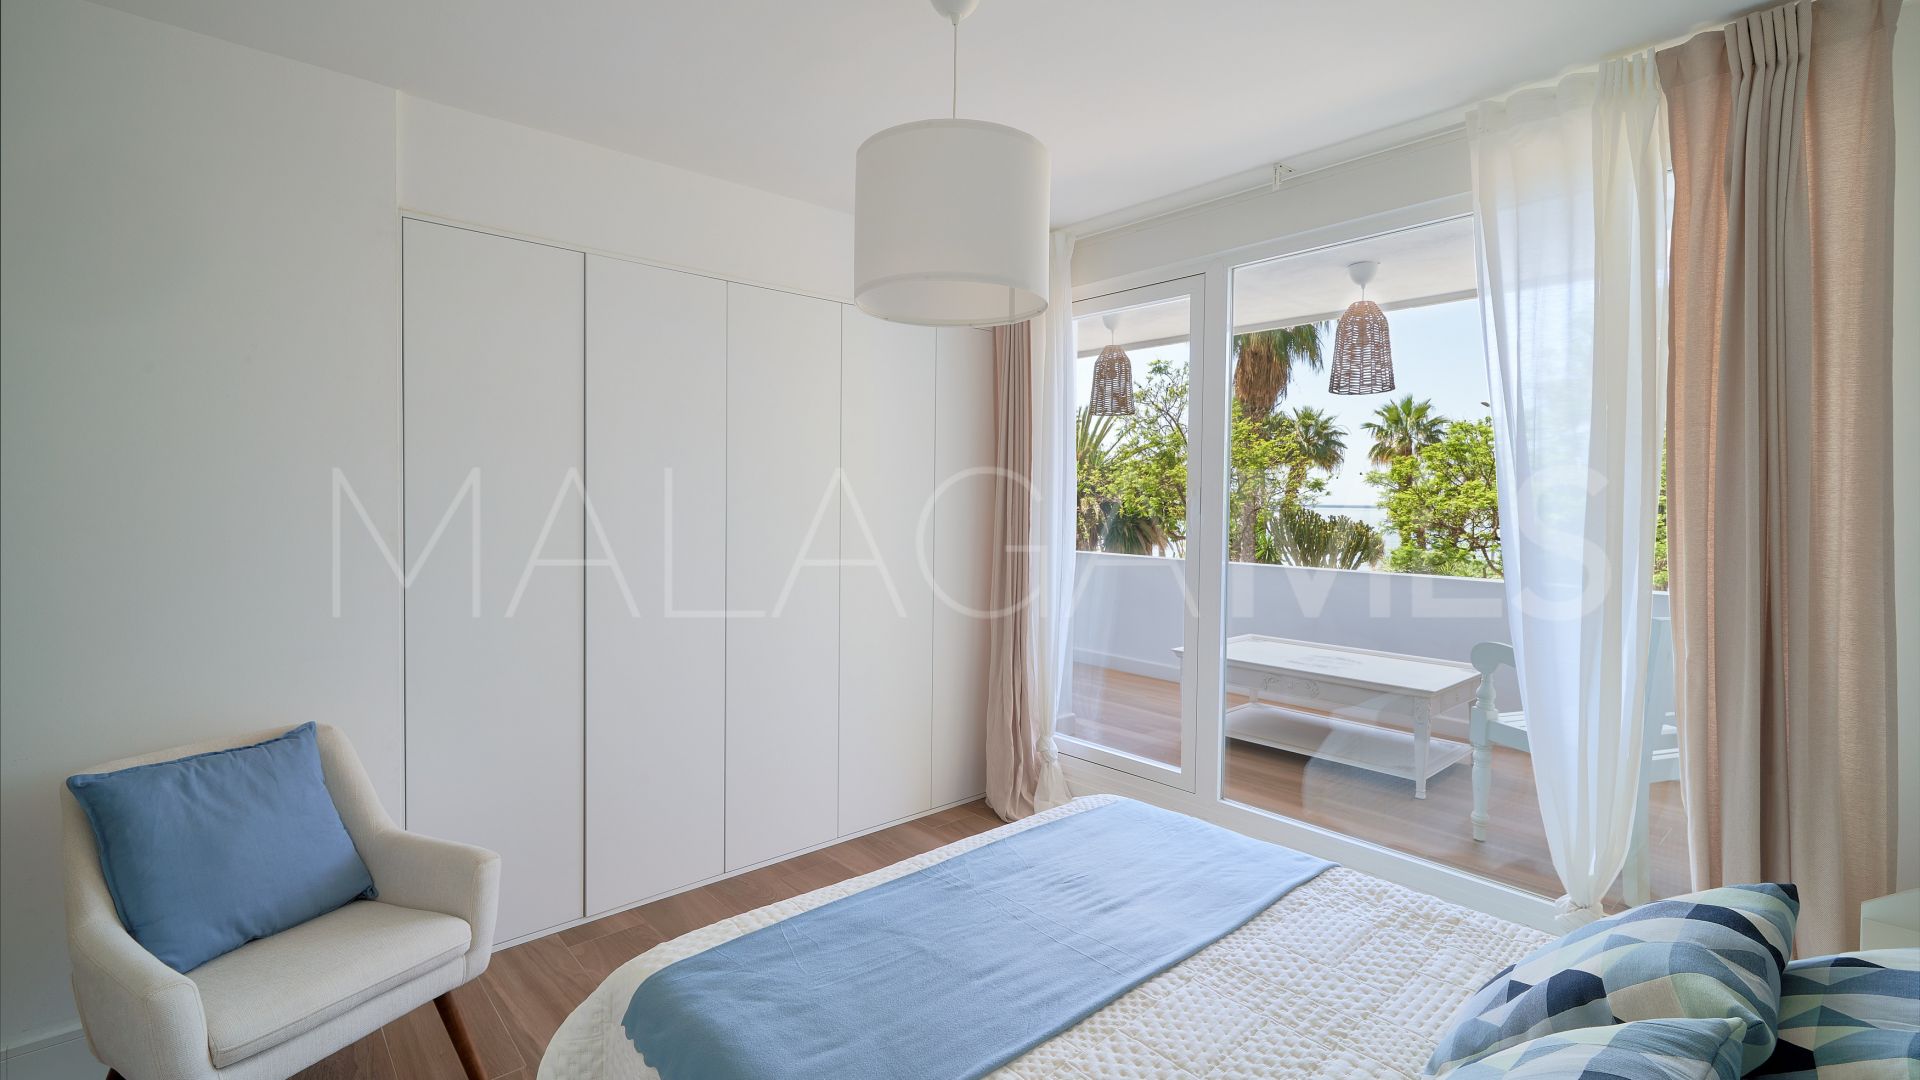 Malaga - Este flat for sale